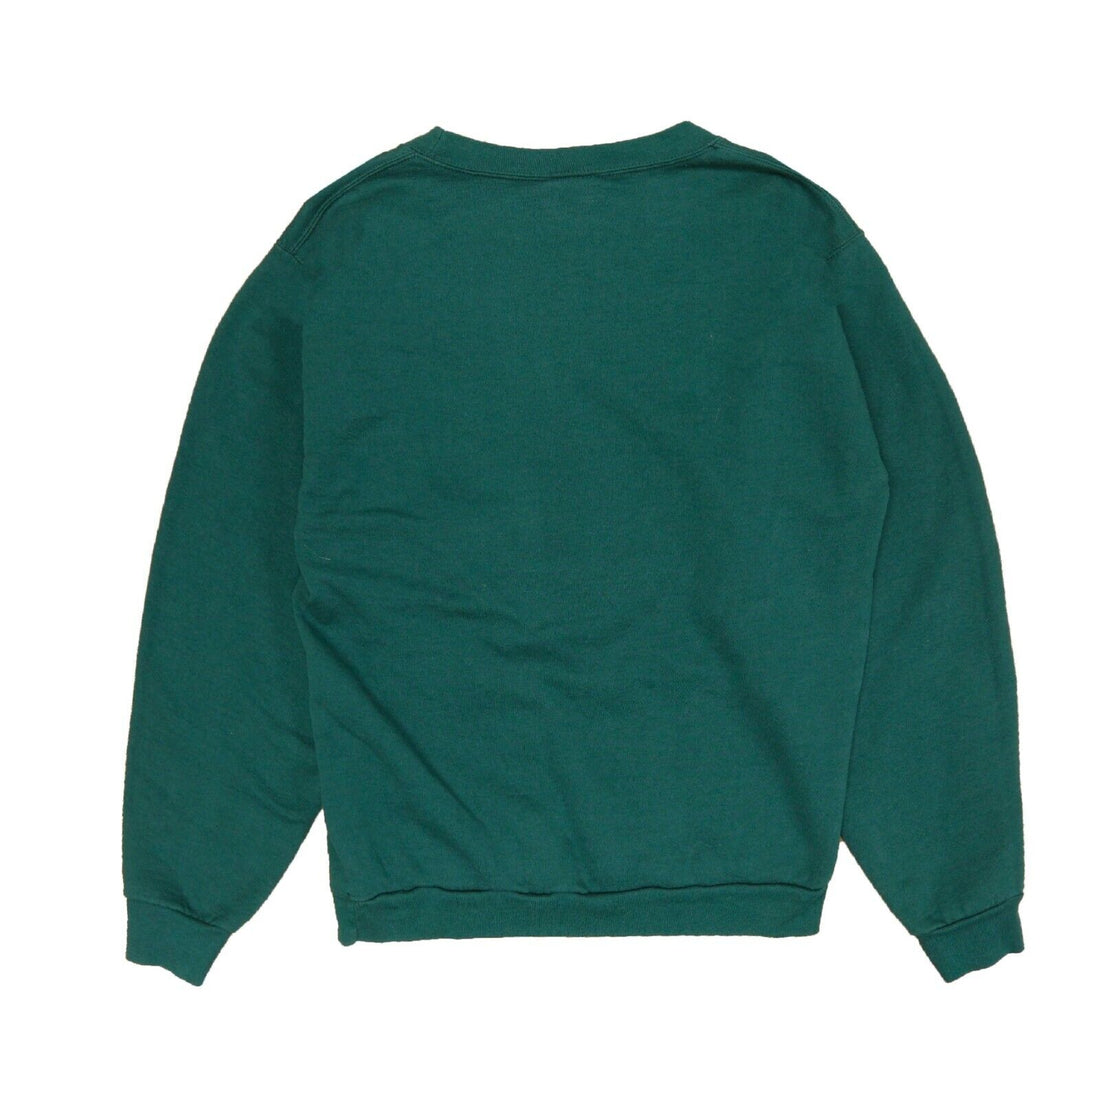 Vintage Planet Hollywood Miami Sweatshirt Crewneck Size Medium Green Embroidered